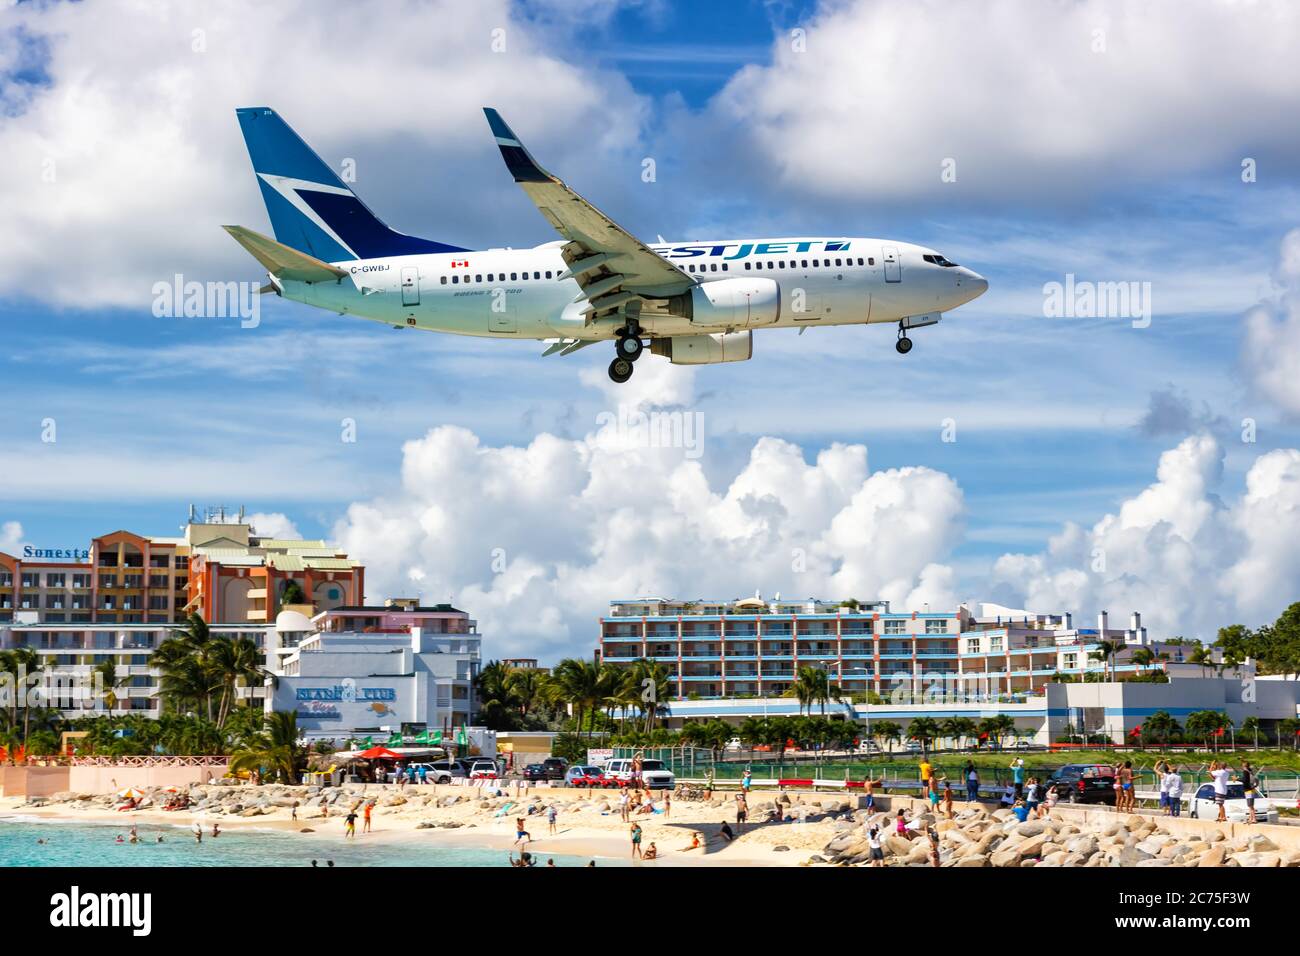 Sint Maarten - September 18, 2016: Westjet Boeing 737-700 airplane at Sint Maarten airport (SXM) in the Caribbean. Boeing is an American aircraft manu Stock Photo